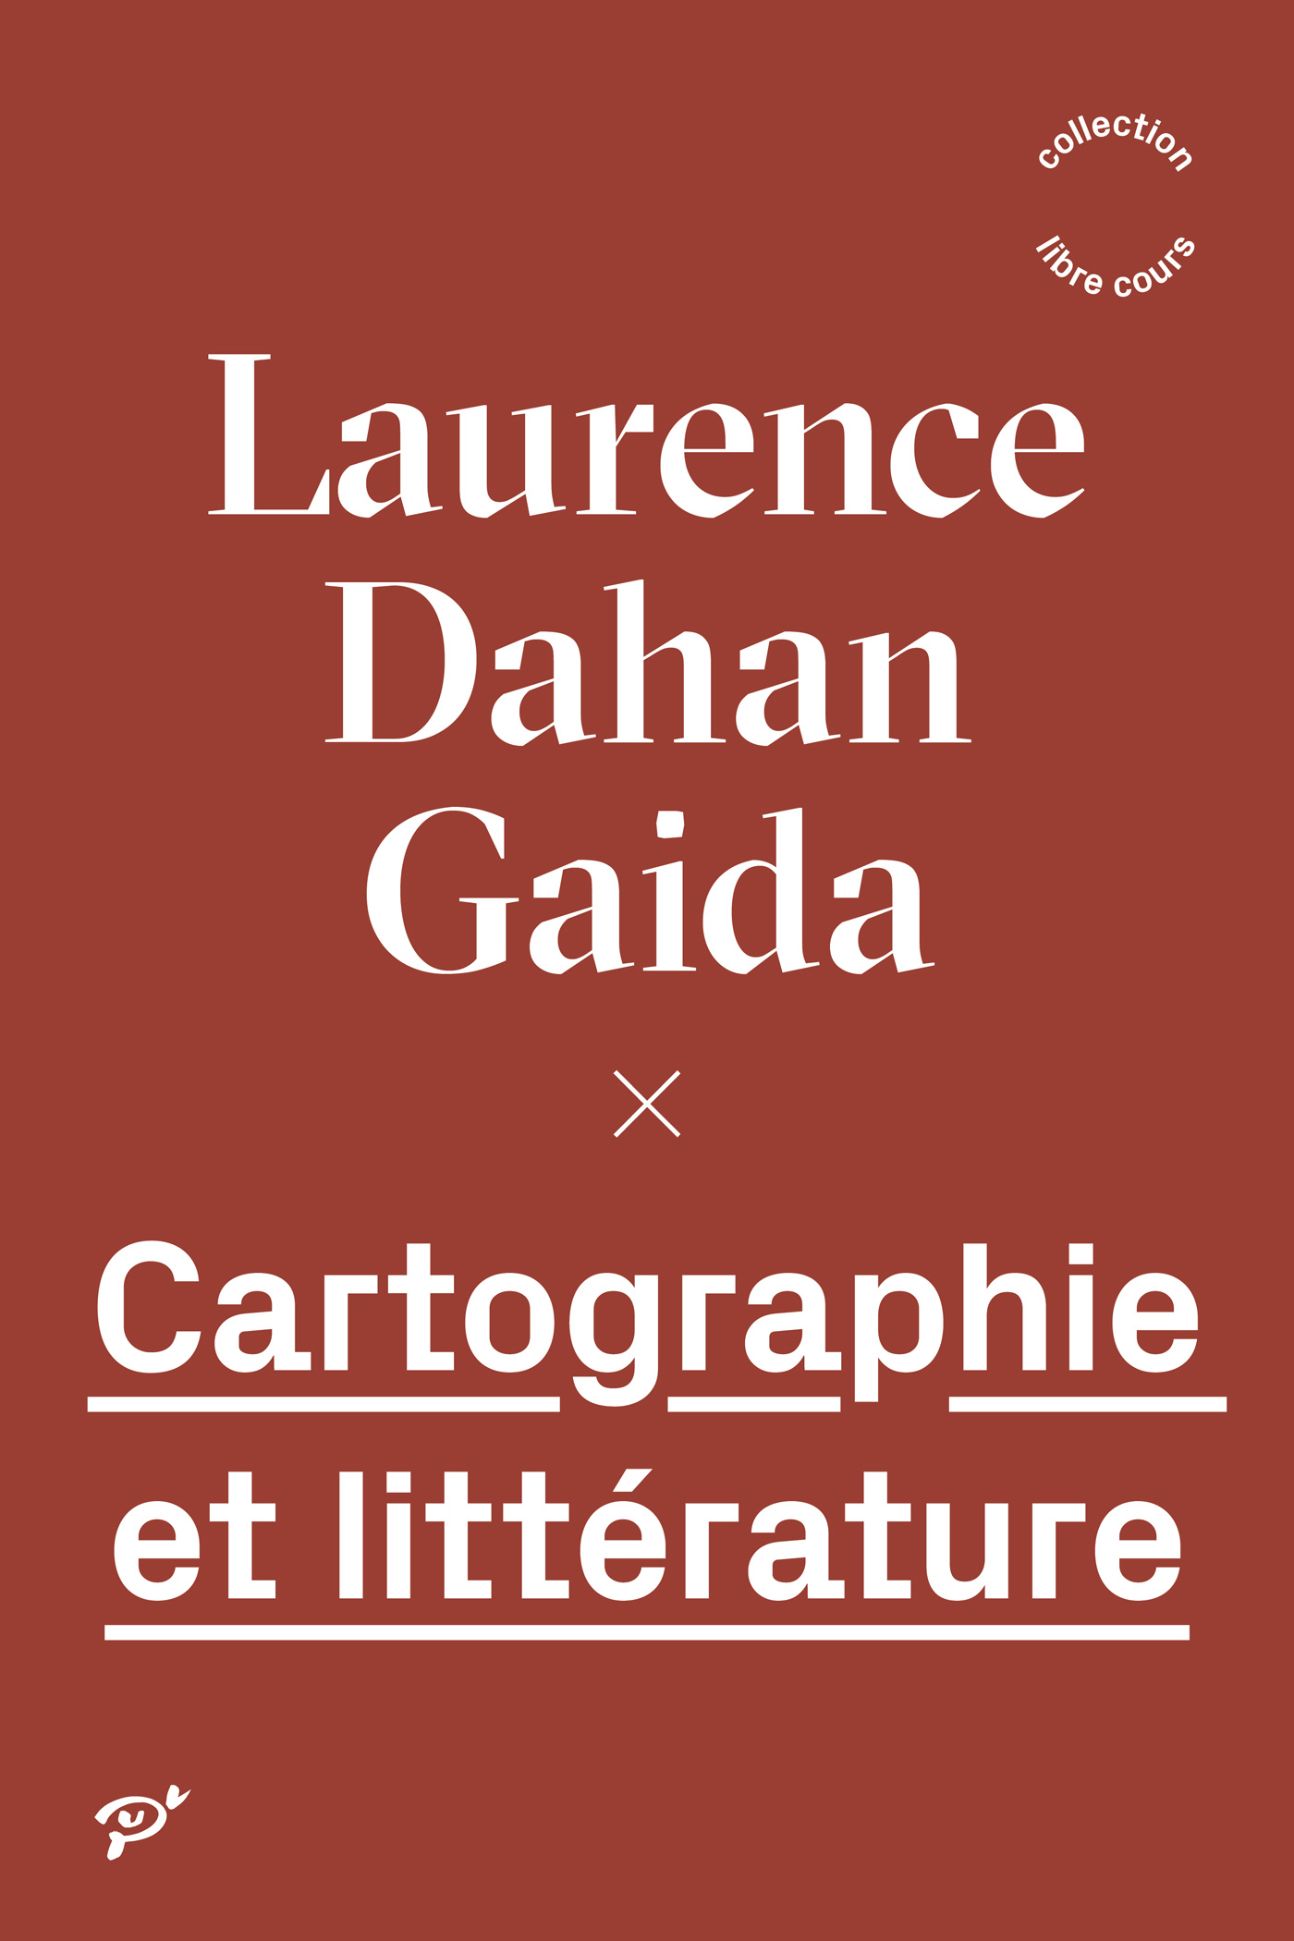 Laurence Dahan-Gaida, Cartographie et littérature